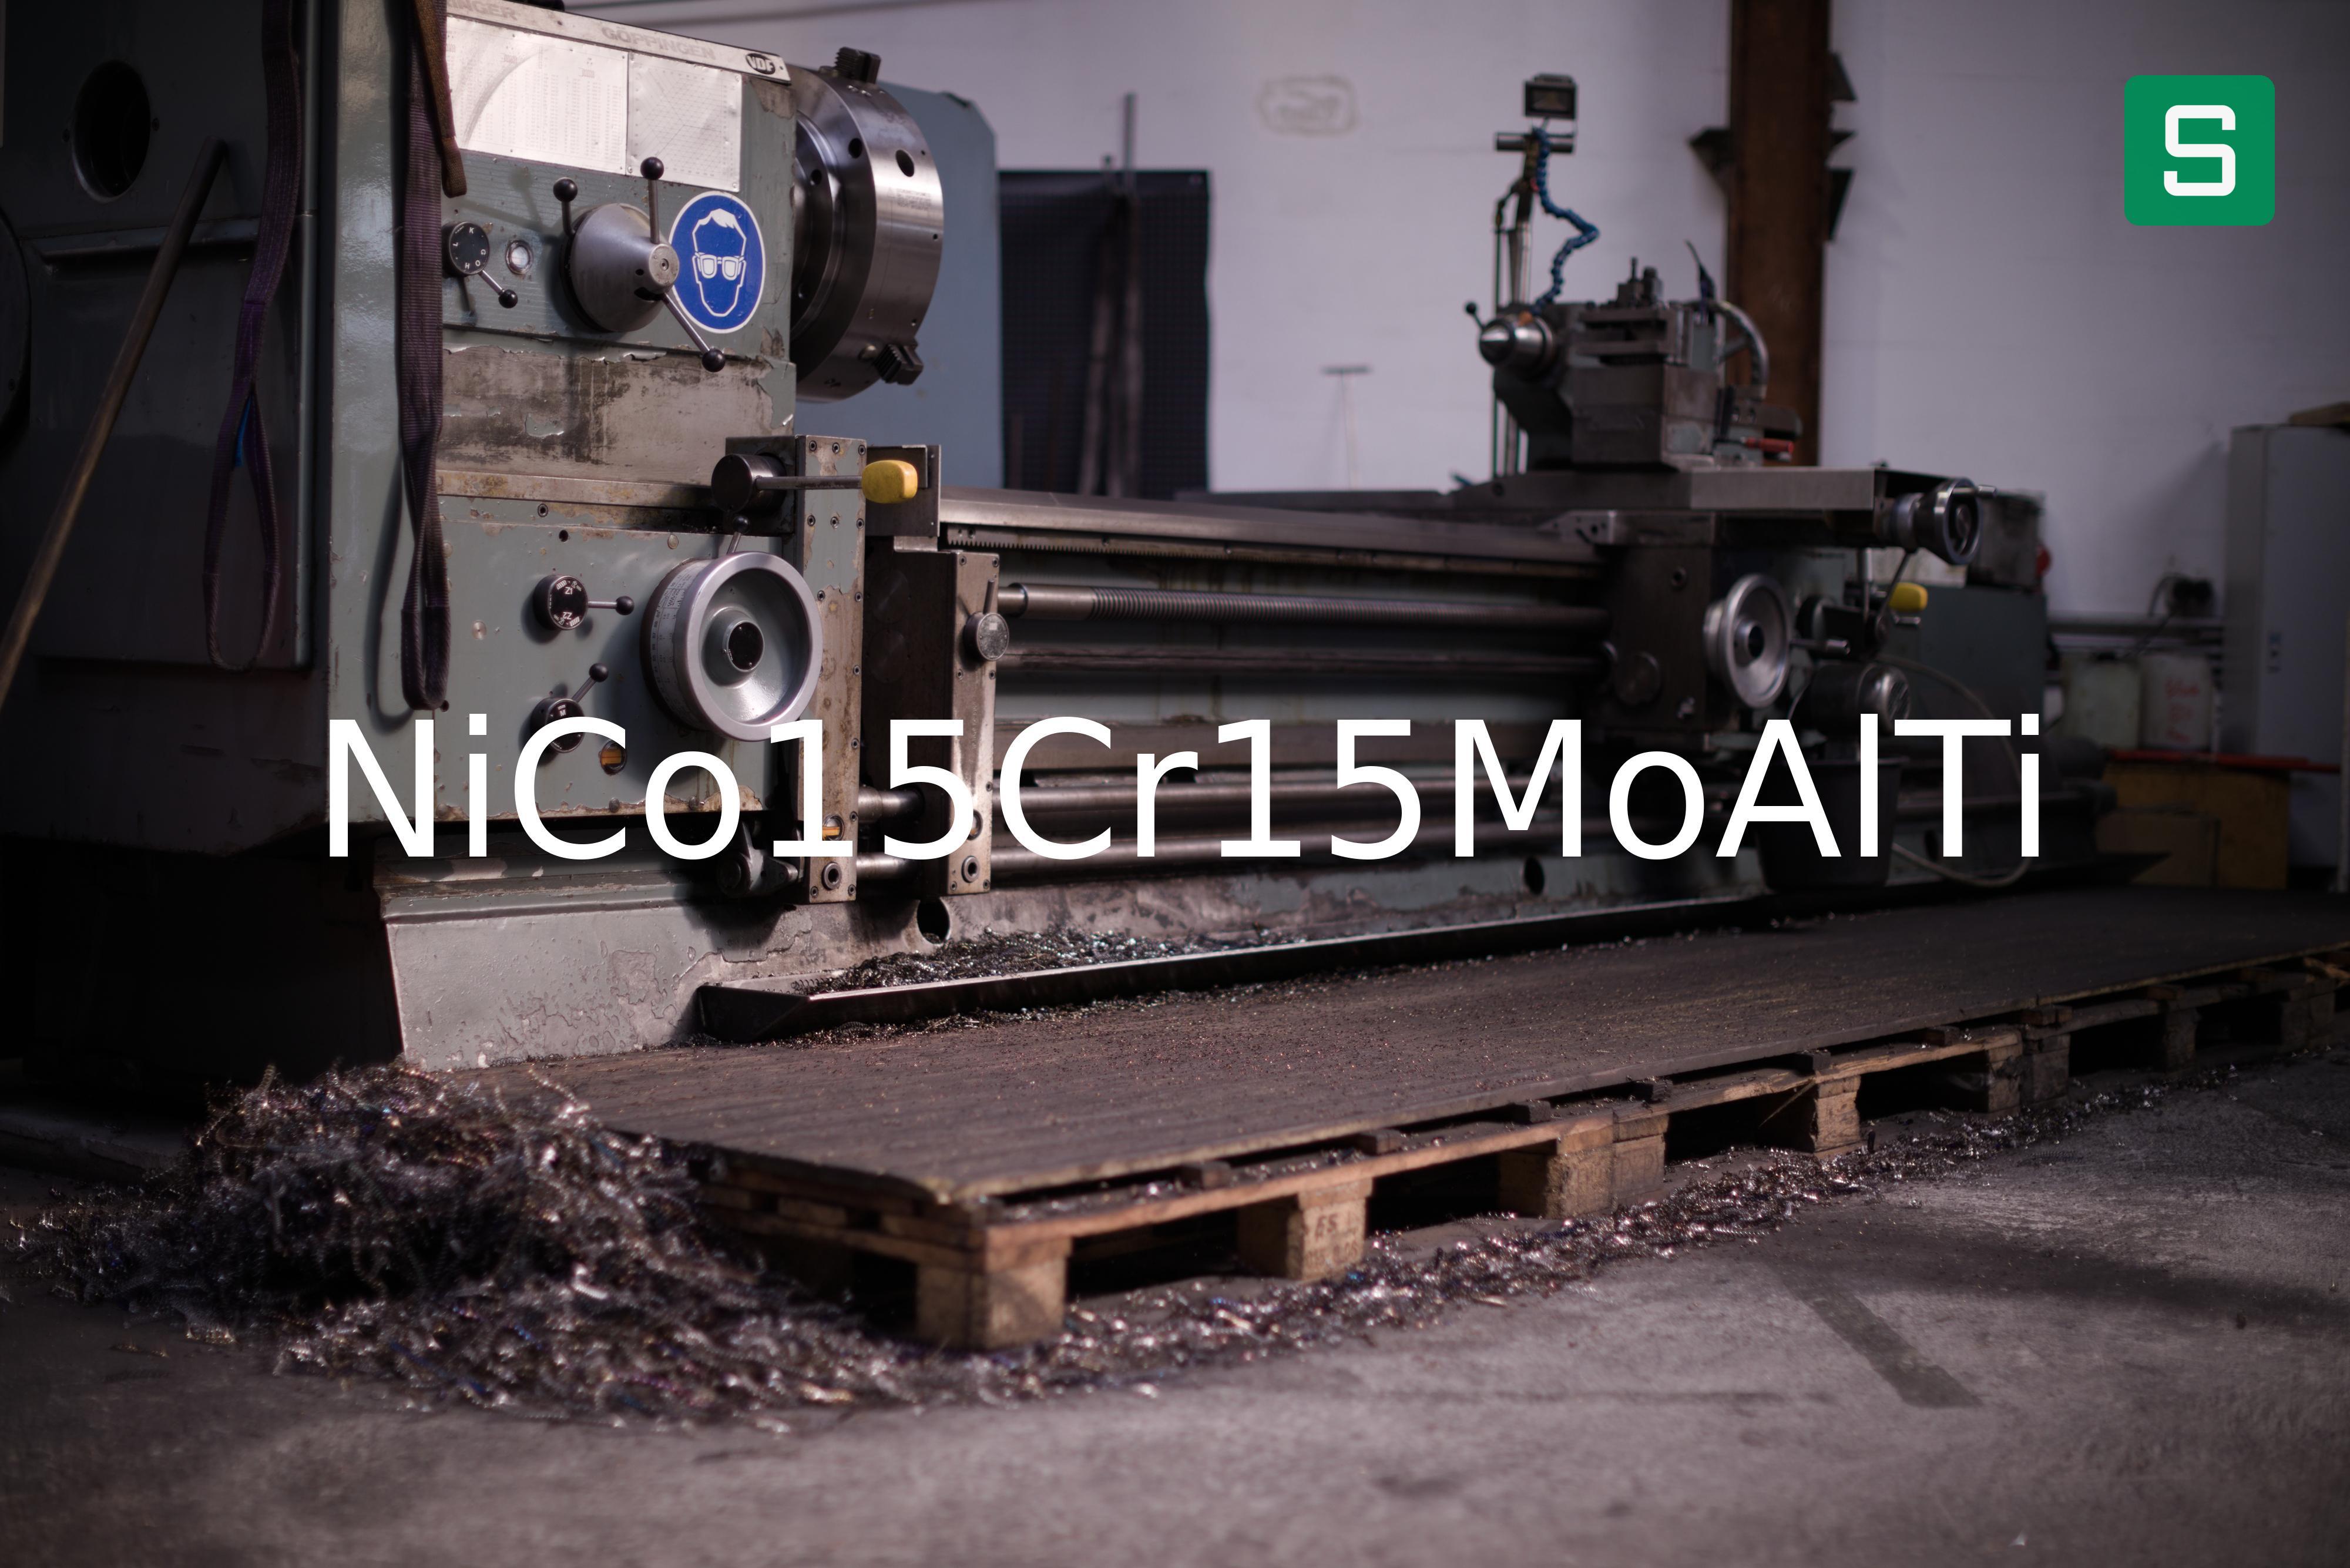 Steel Material: NiCo15Cr15MoAlTi